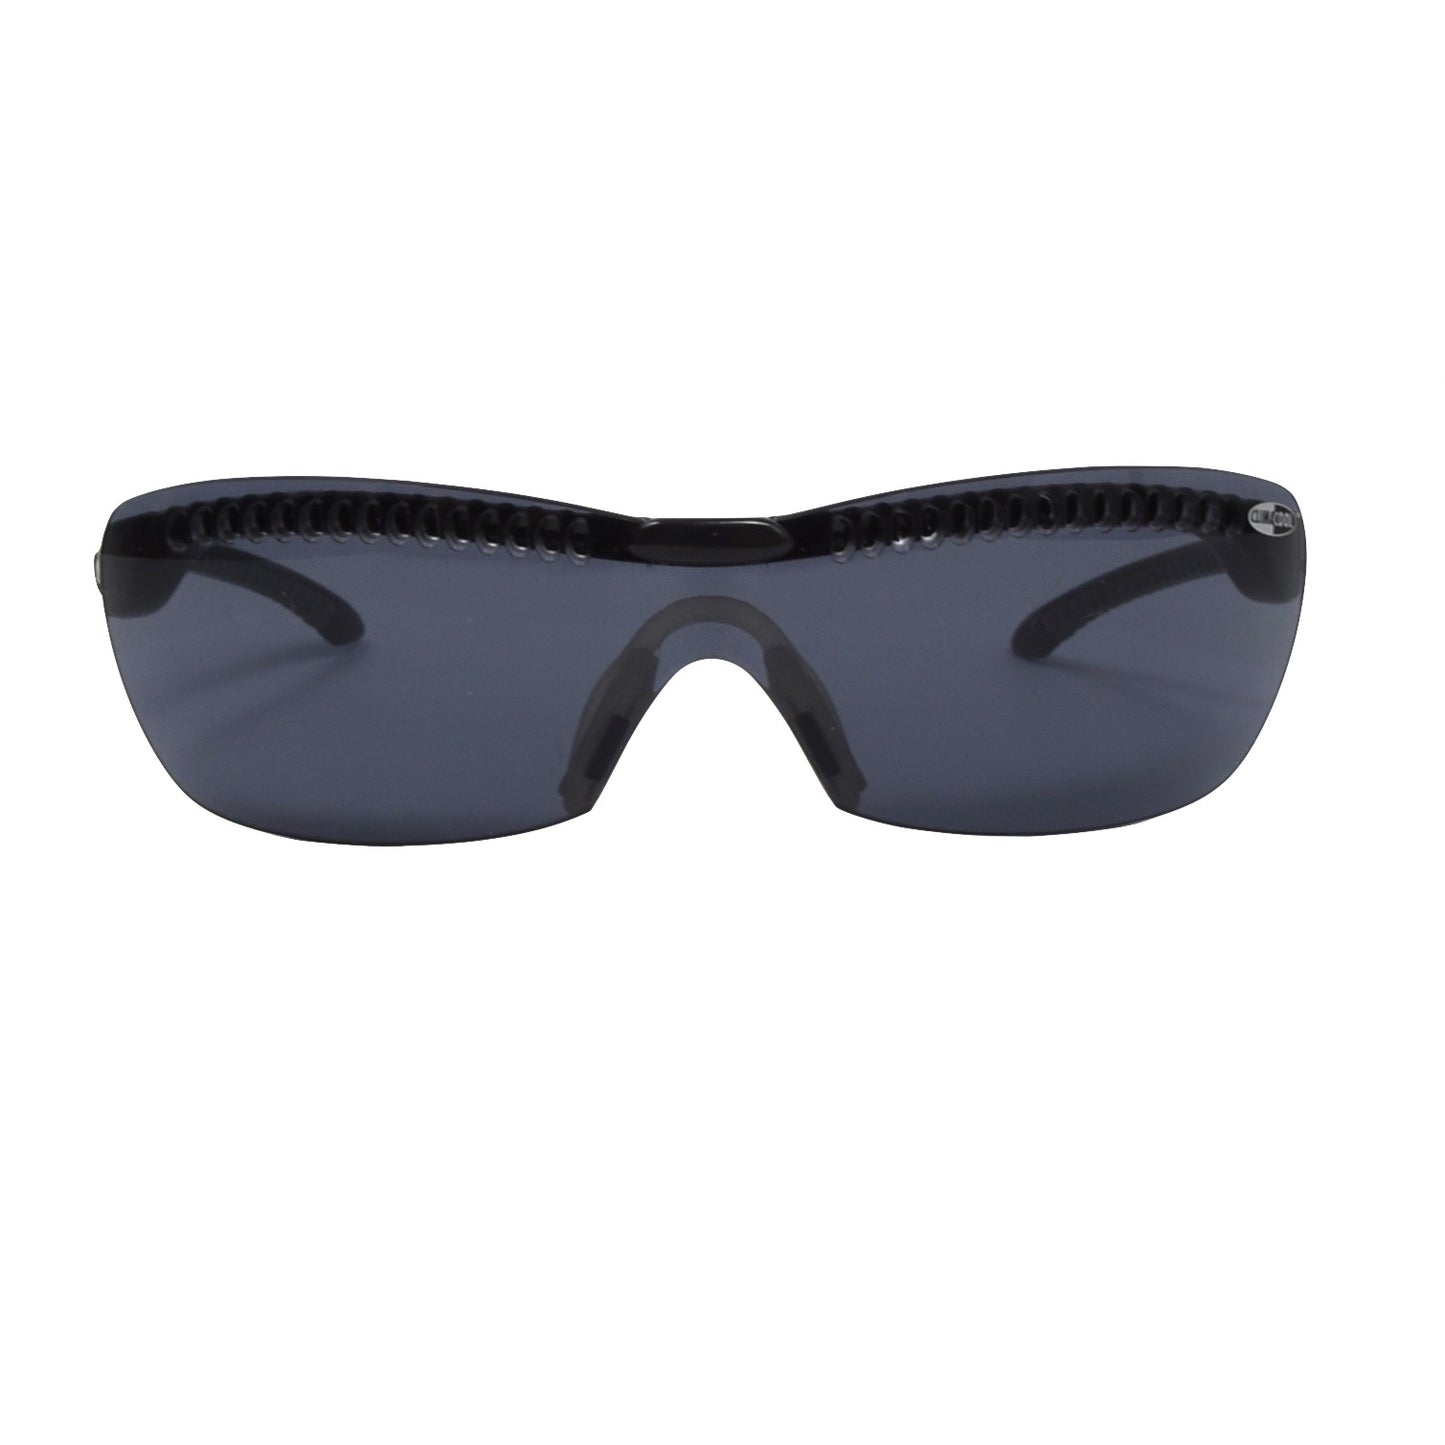 Adidas A138 6050 Gazelle Sunglasses - Black